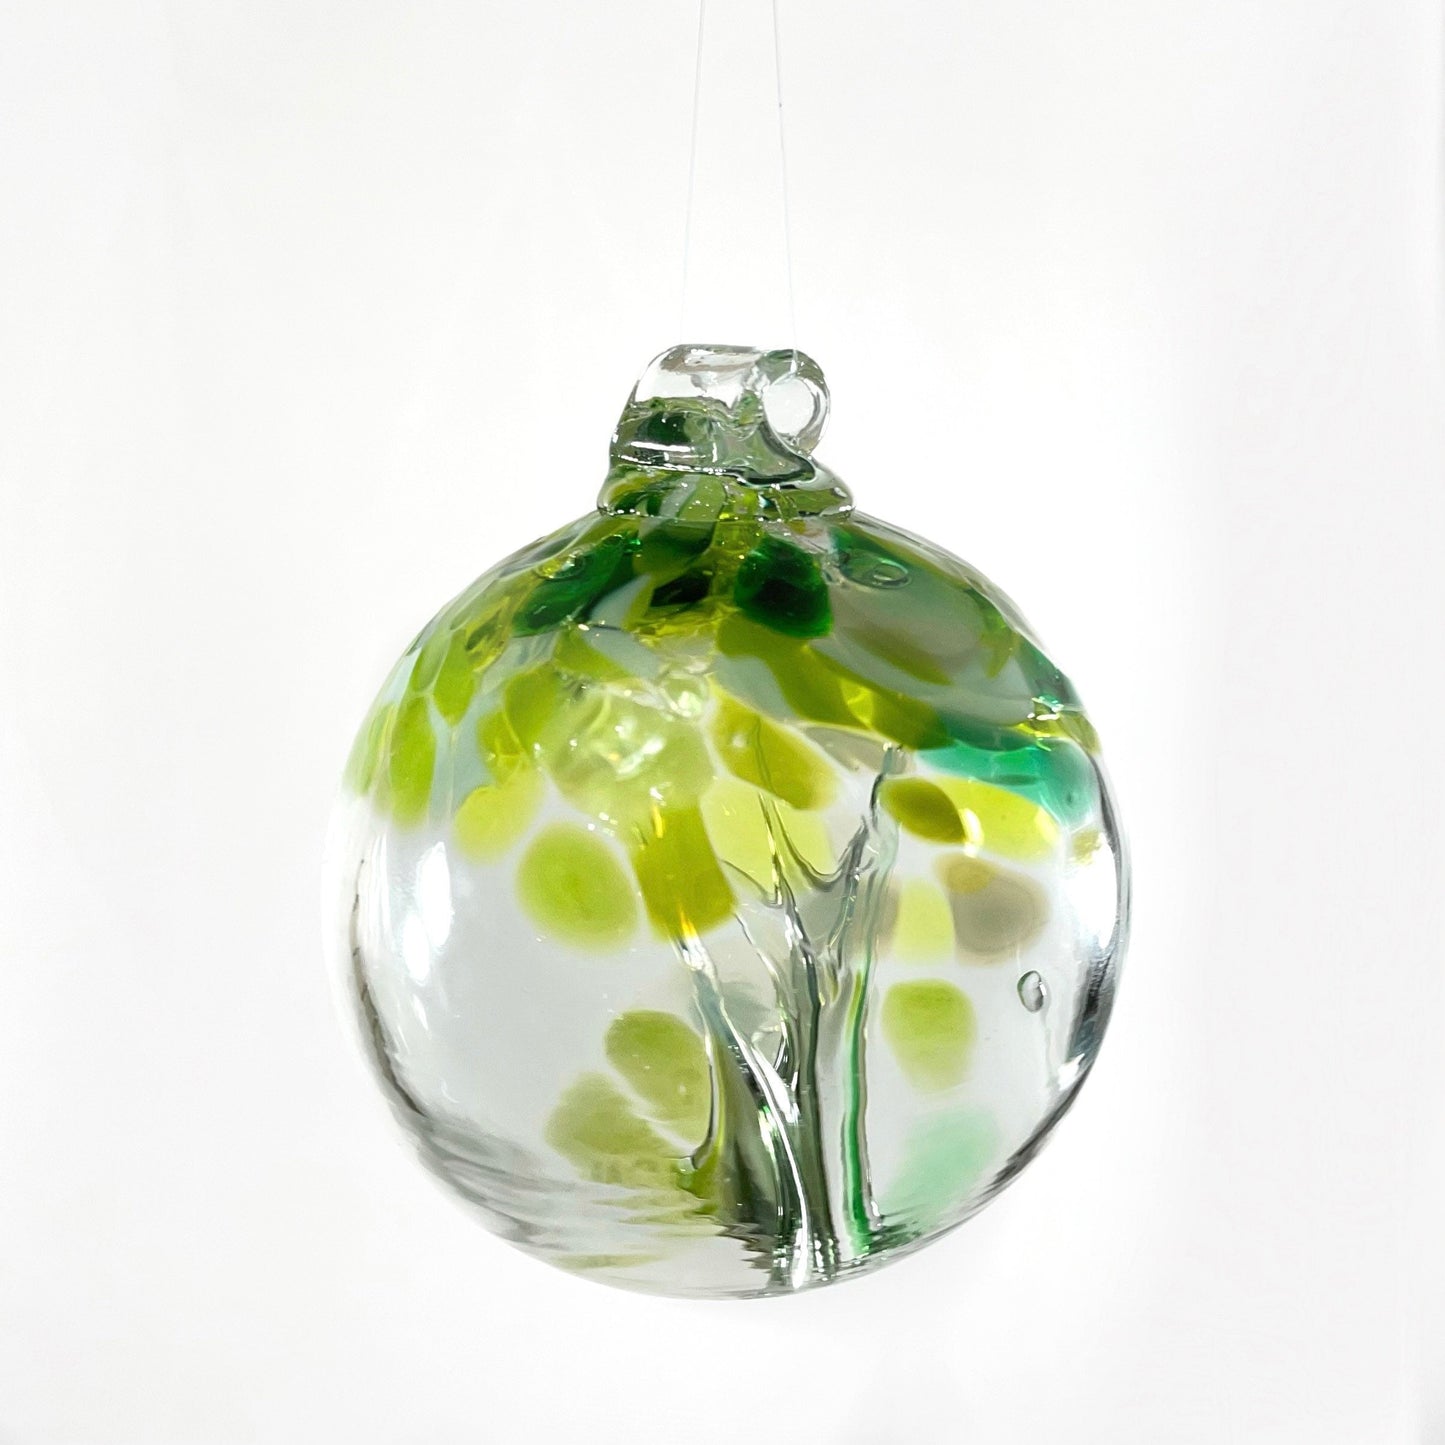 Handmade Glass Art 2” Globe Ornament - Tree of Wellbeing